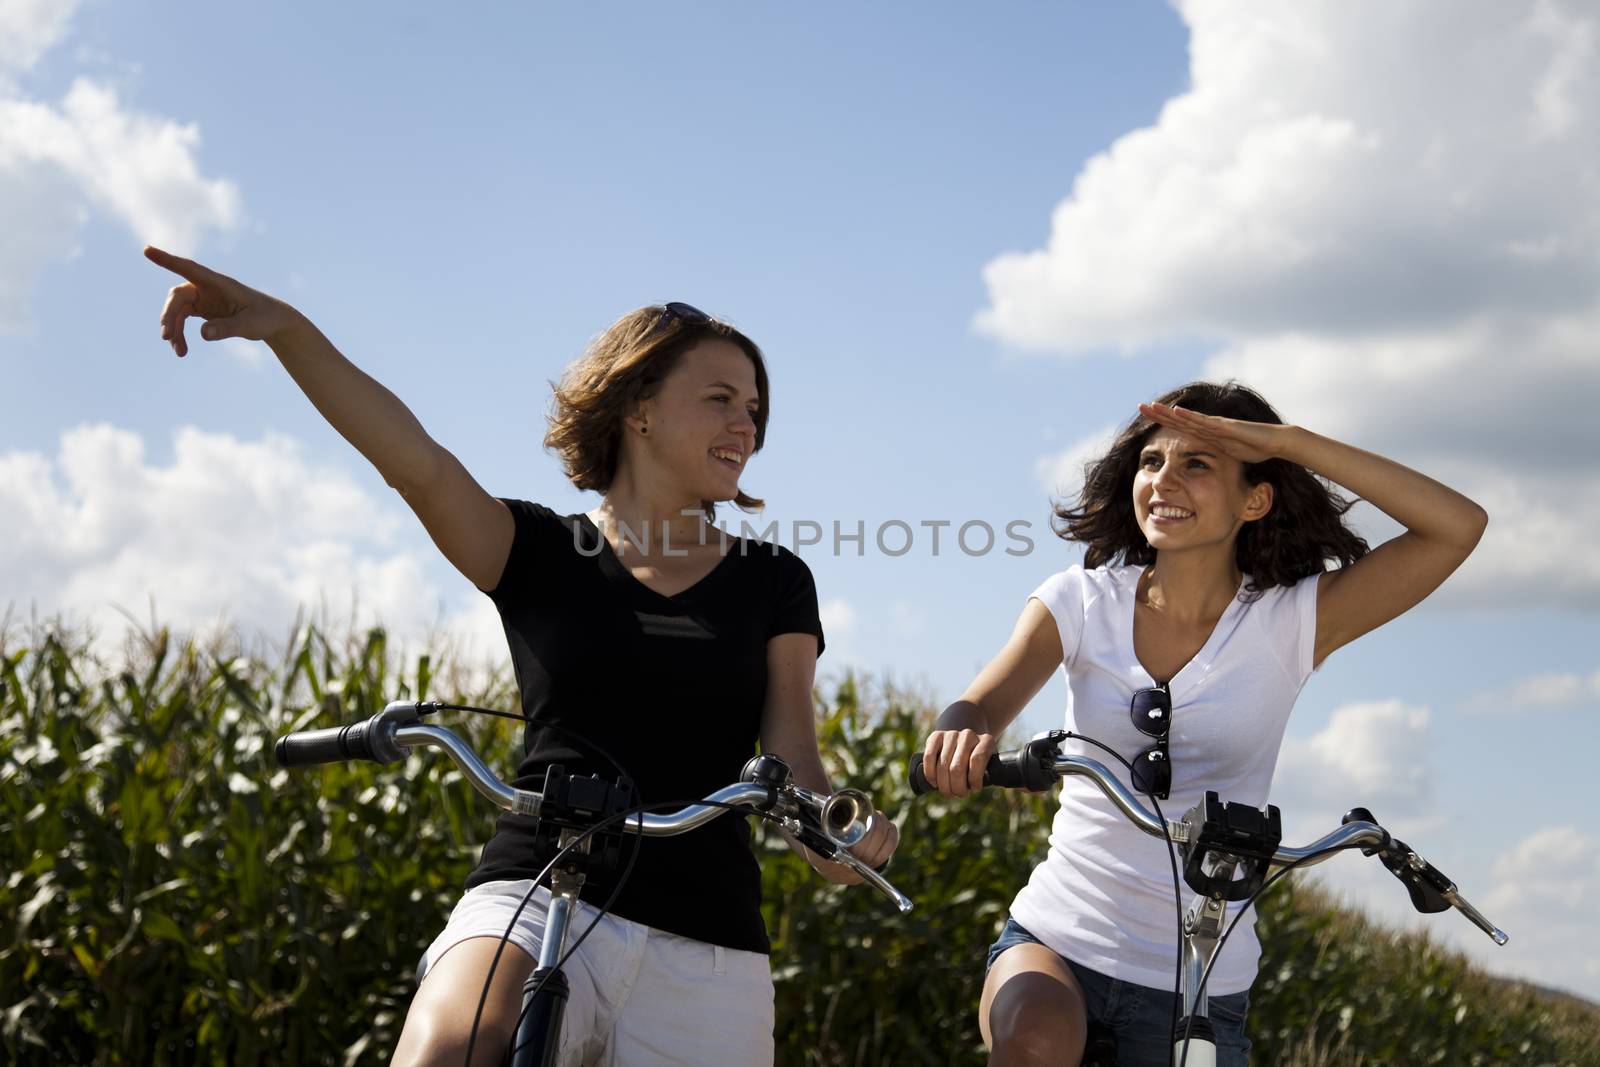 Woman bike, summer free time spending